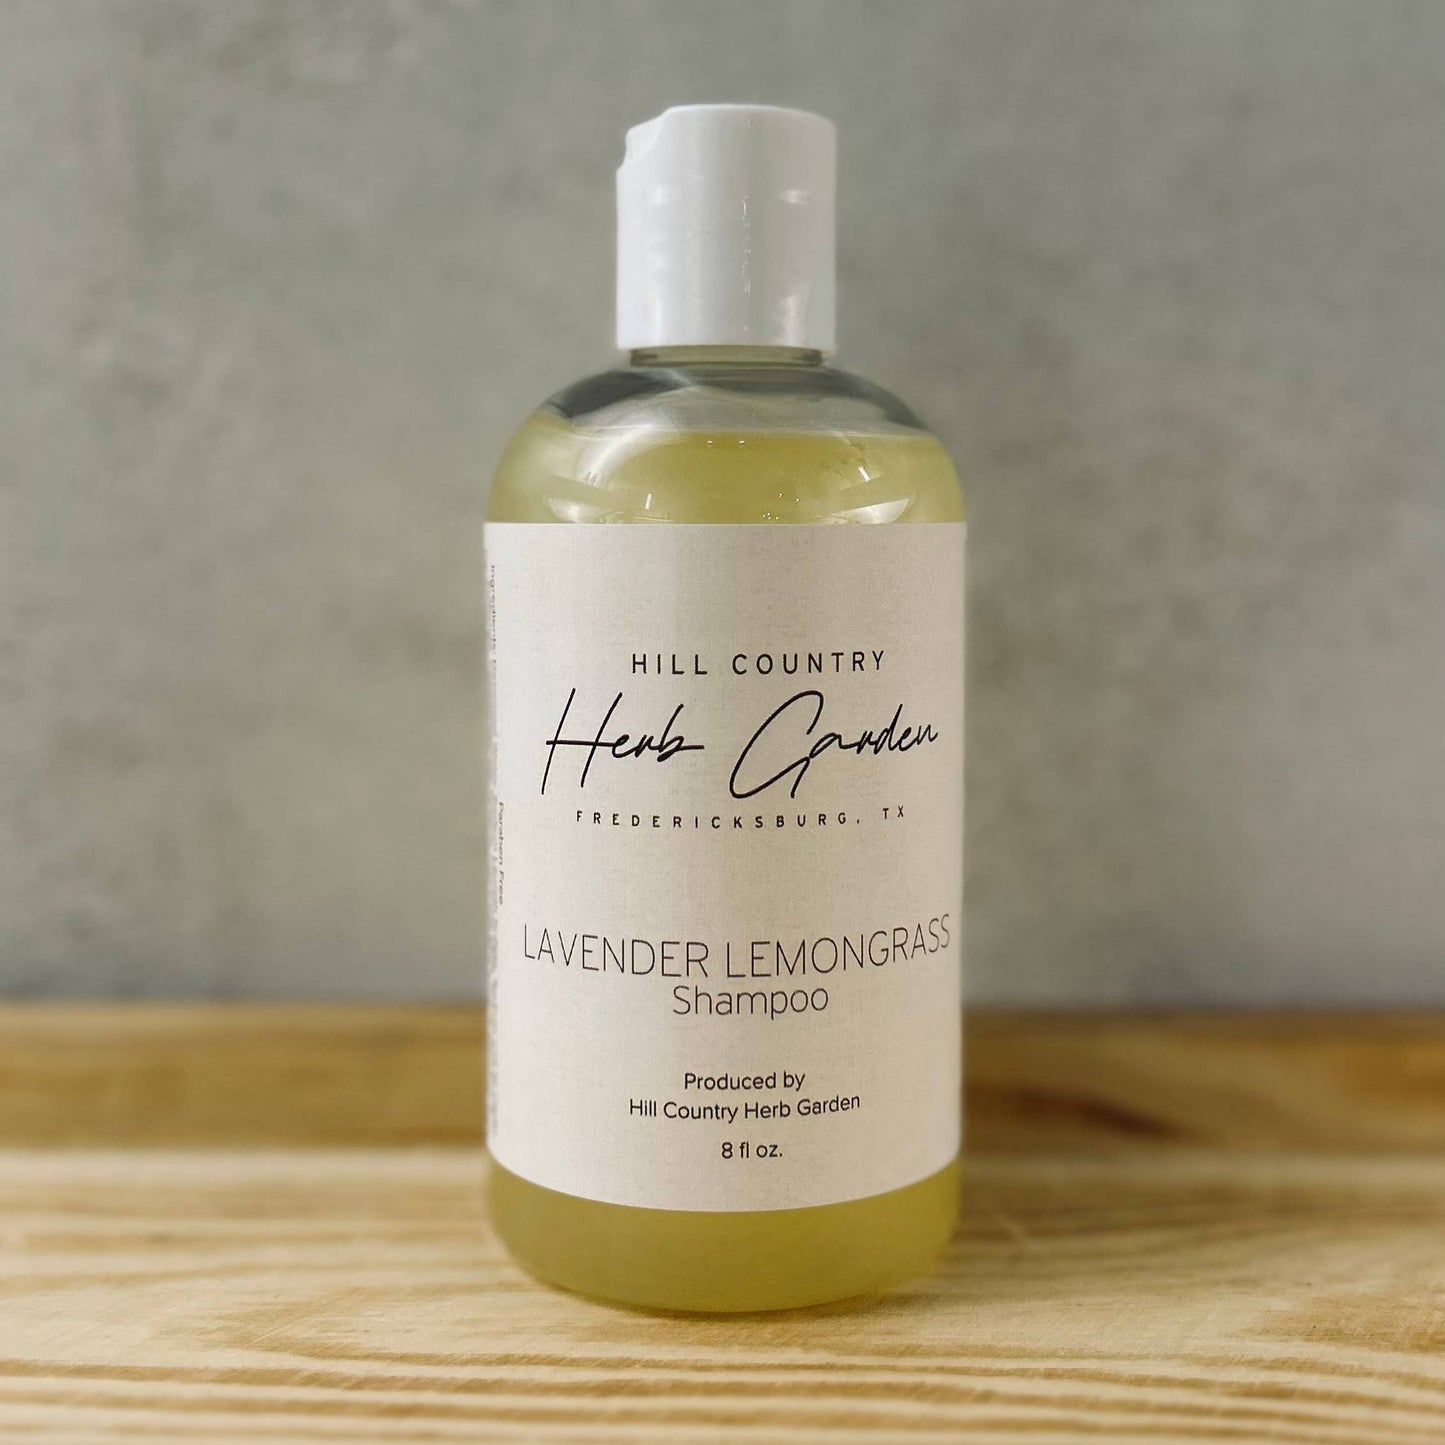 Hill Country Herb Garden - Lavender Lemongrass Shampoo